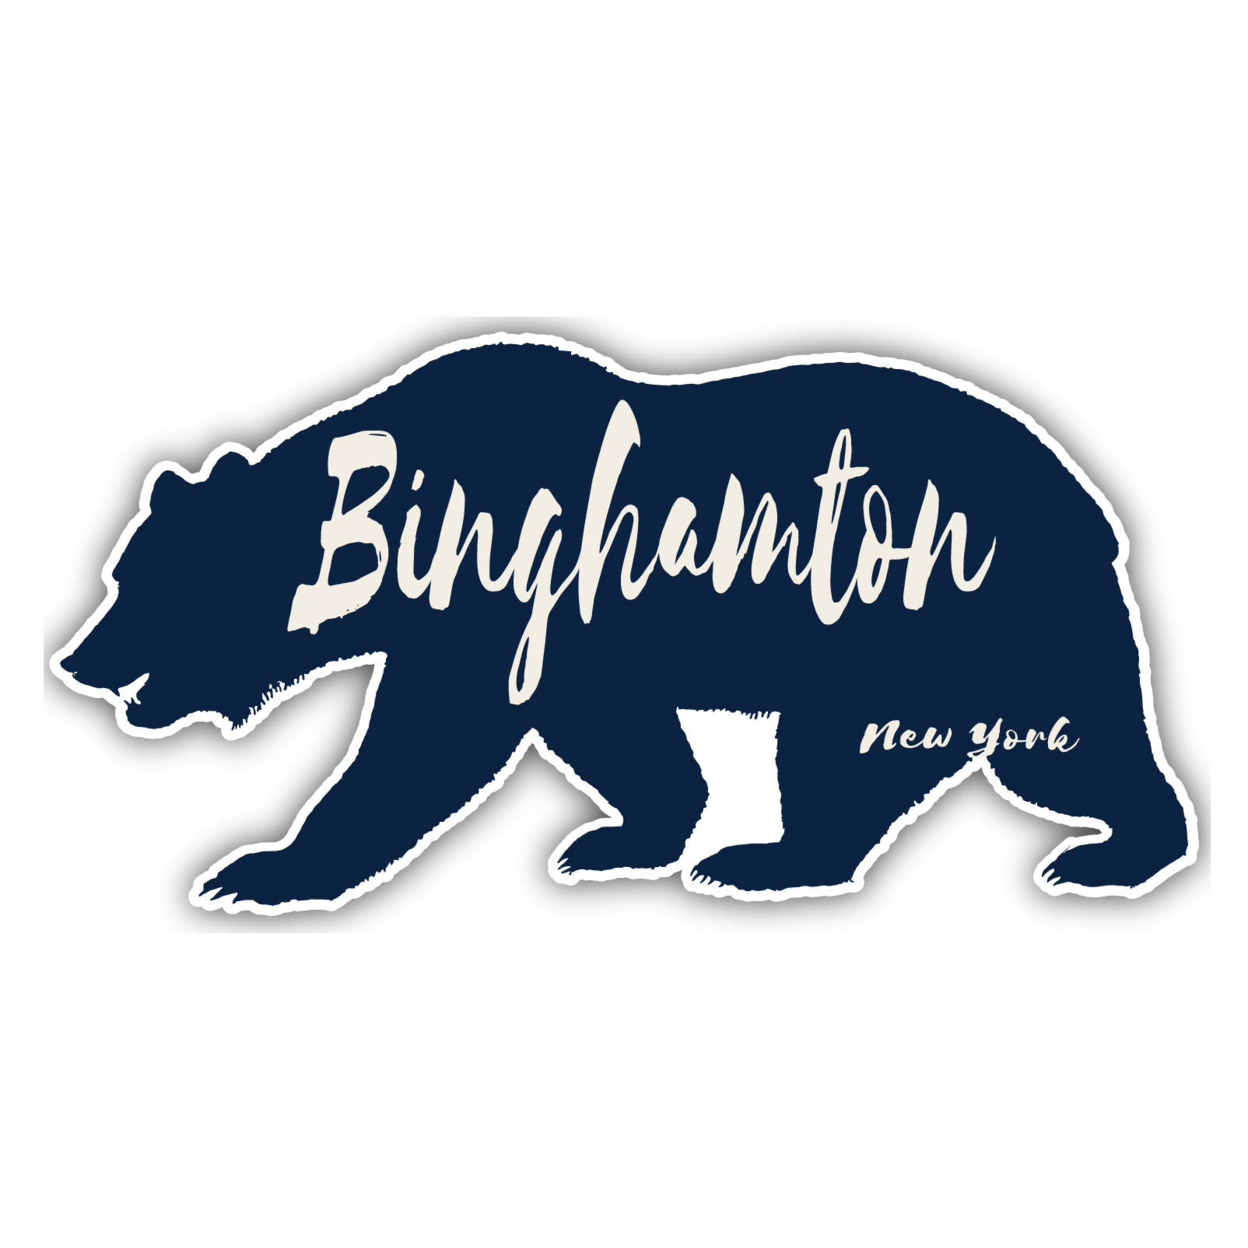 Binghamton New York Souvenir Decorative Stickers (Choose Theme And Size) - 4-Pack, 2-Inch, Bear